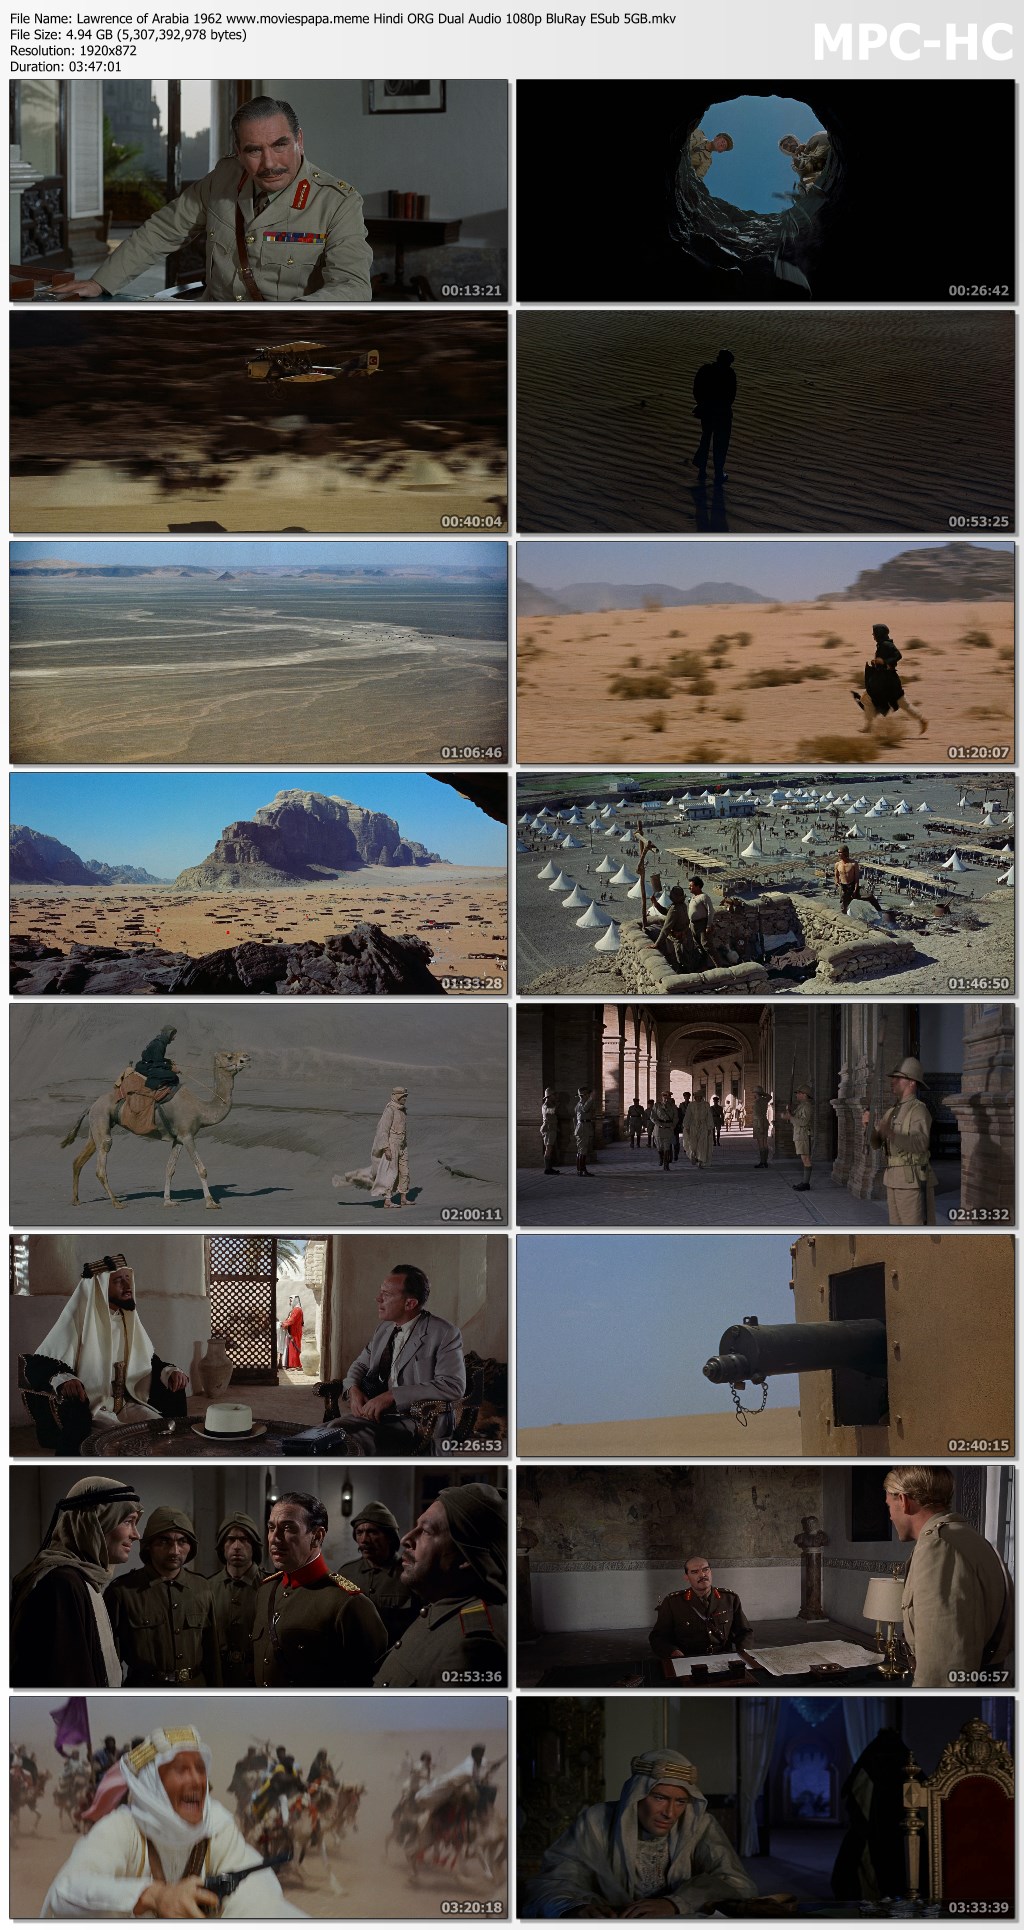 Lawrence of Arabia 1962 www.moviespapa.meme Hindi ORG Dual Audio 1080p BluRay ESub 5GB.mkv thumbs